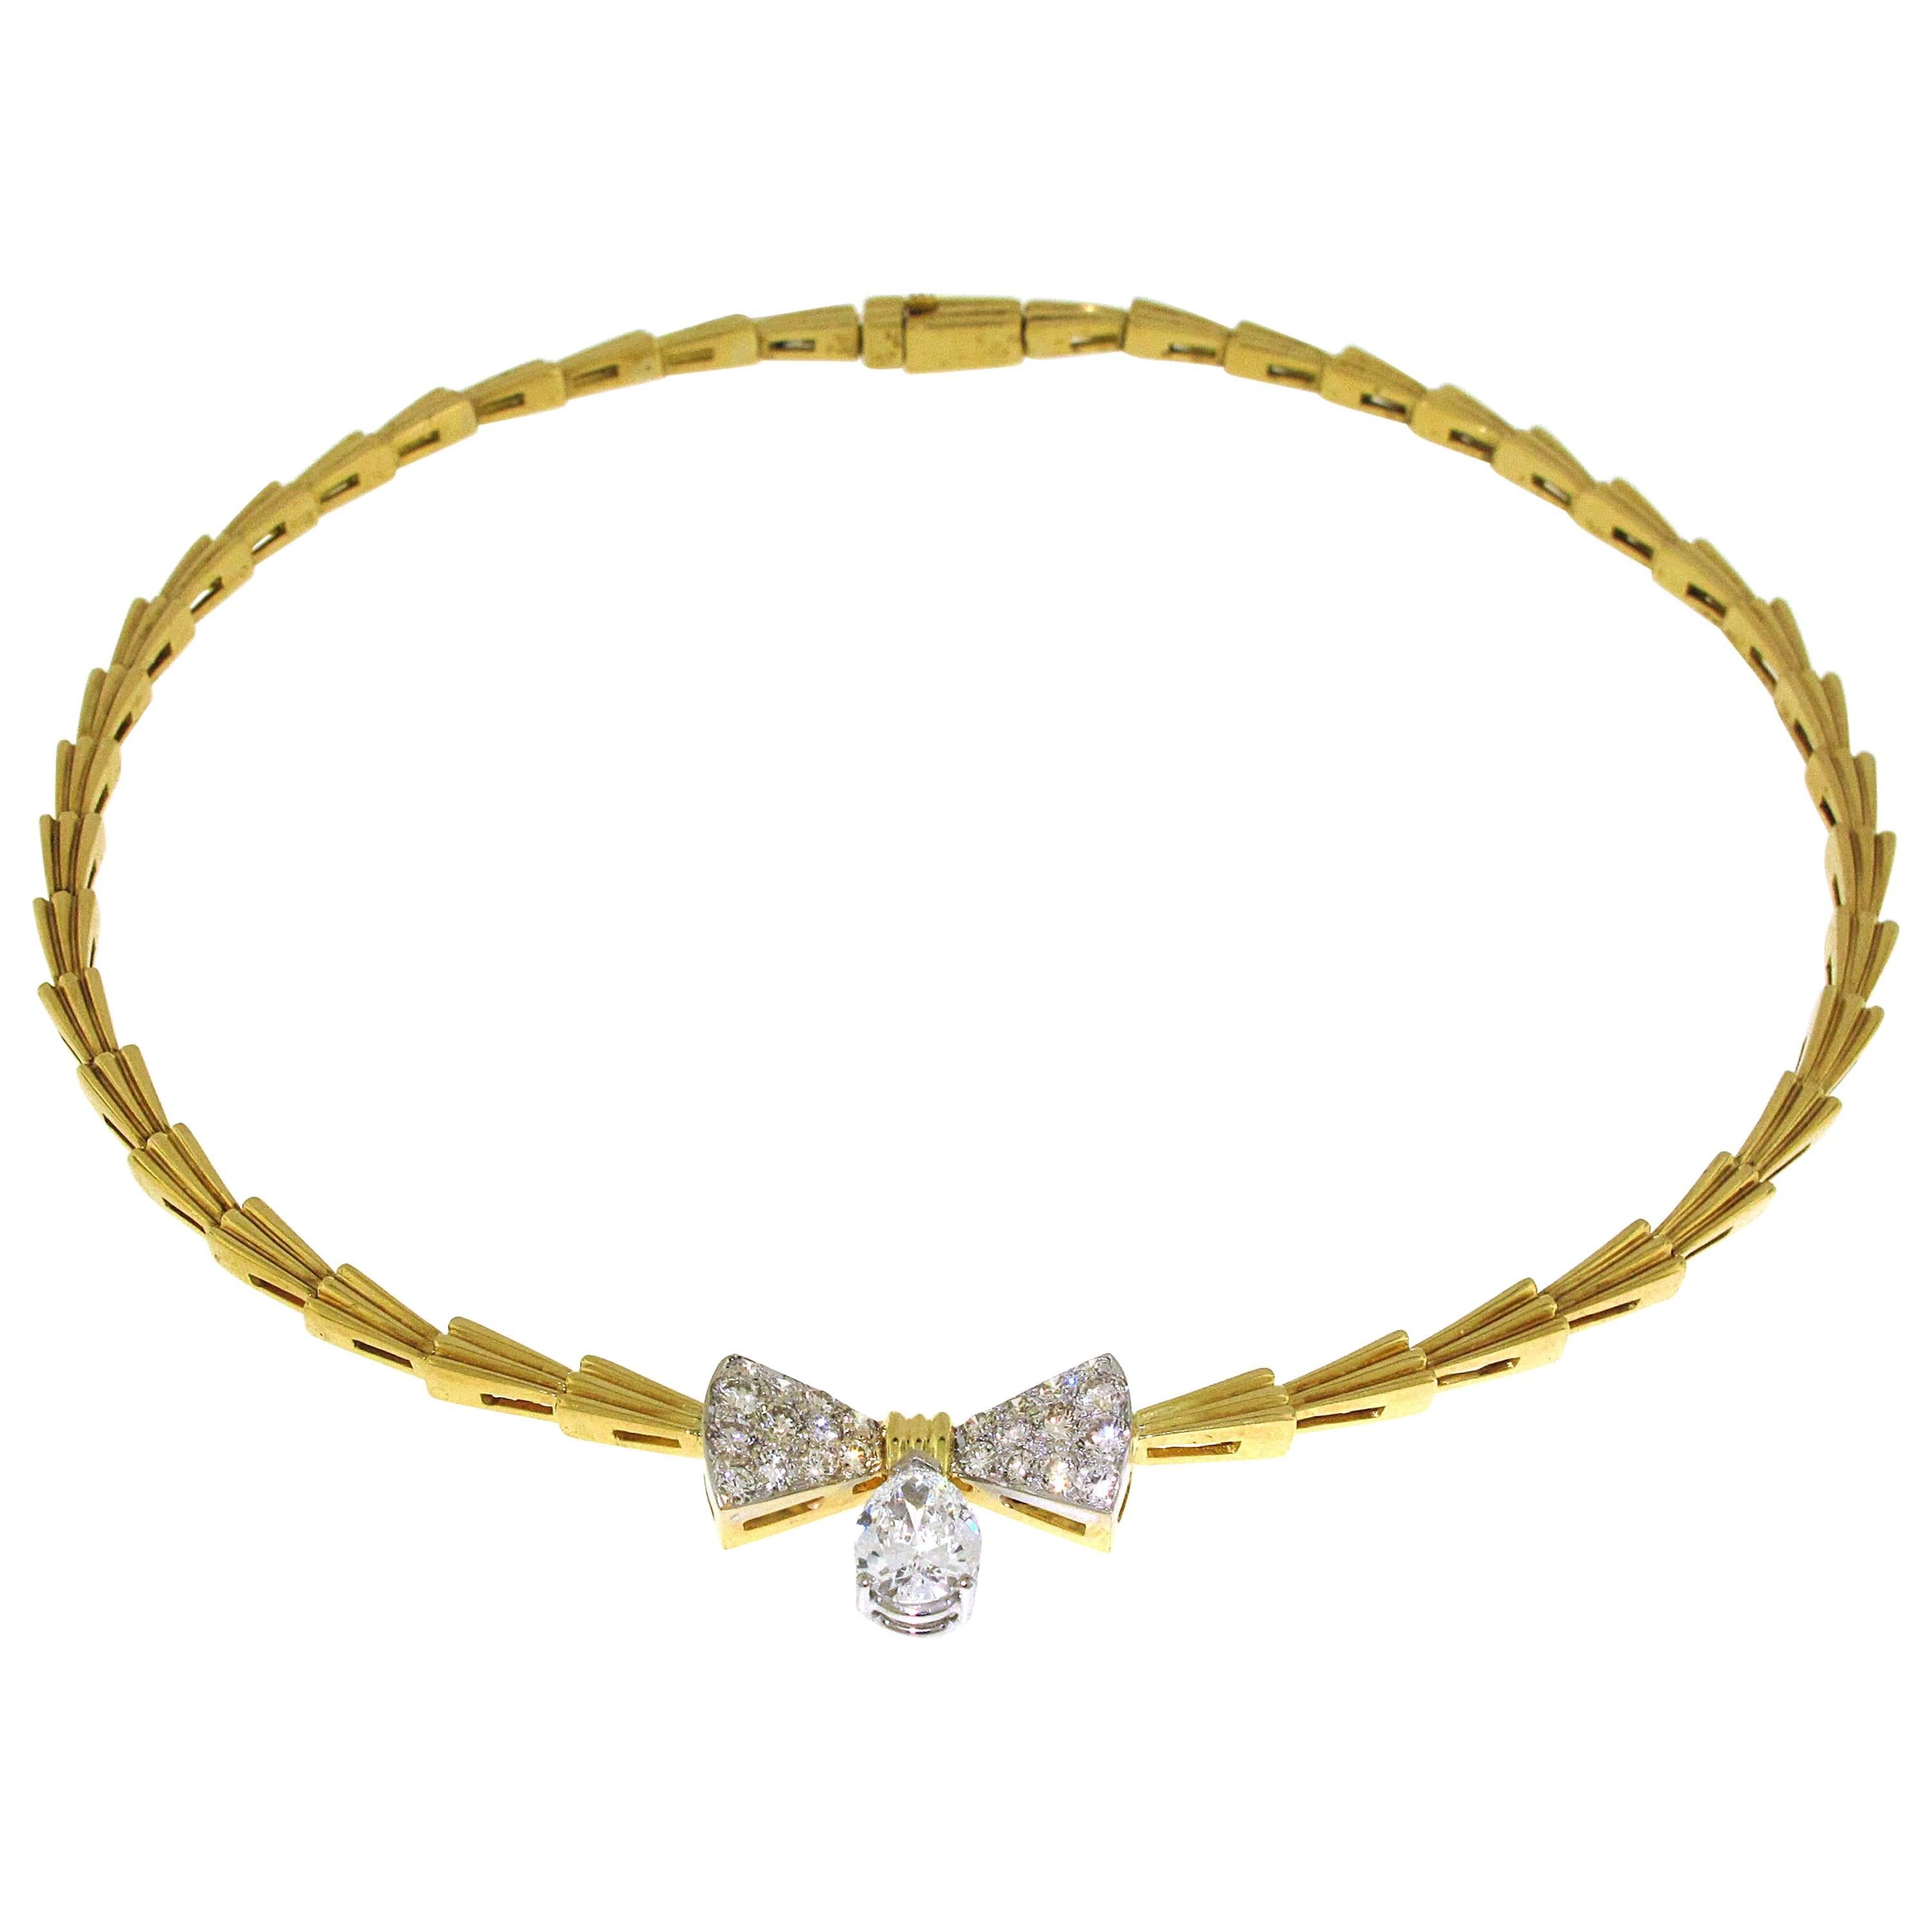 1.51 Pear Shape Diamond Necklace Set in 18 Karat Yellow Gold